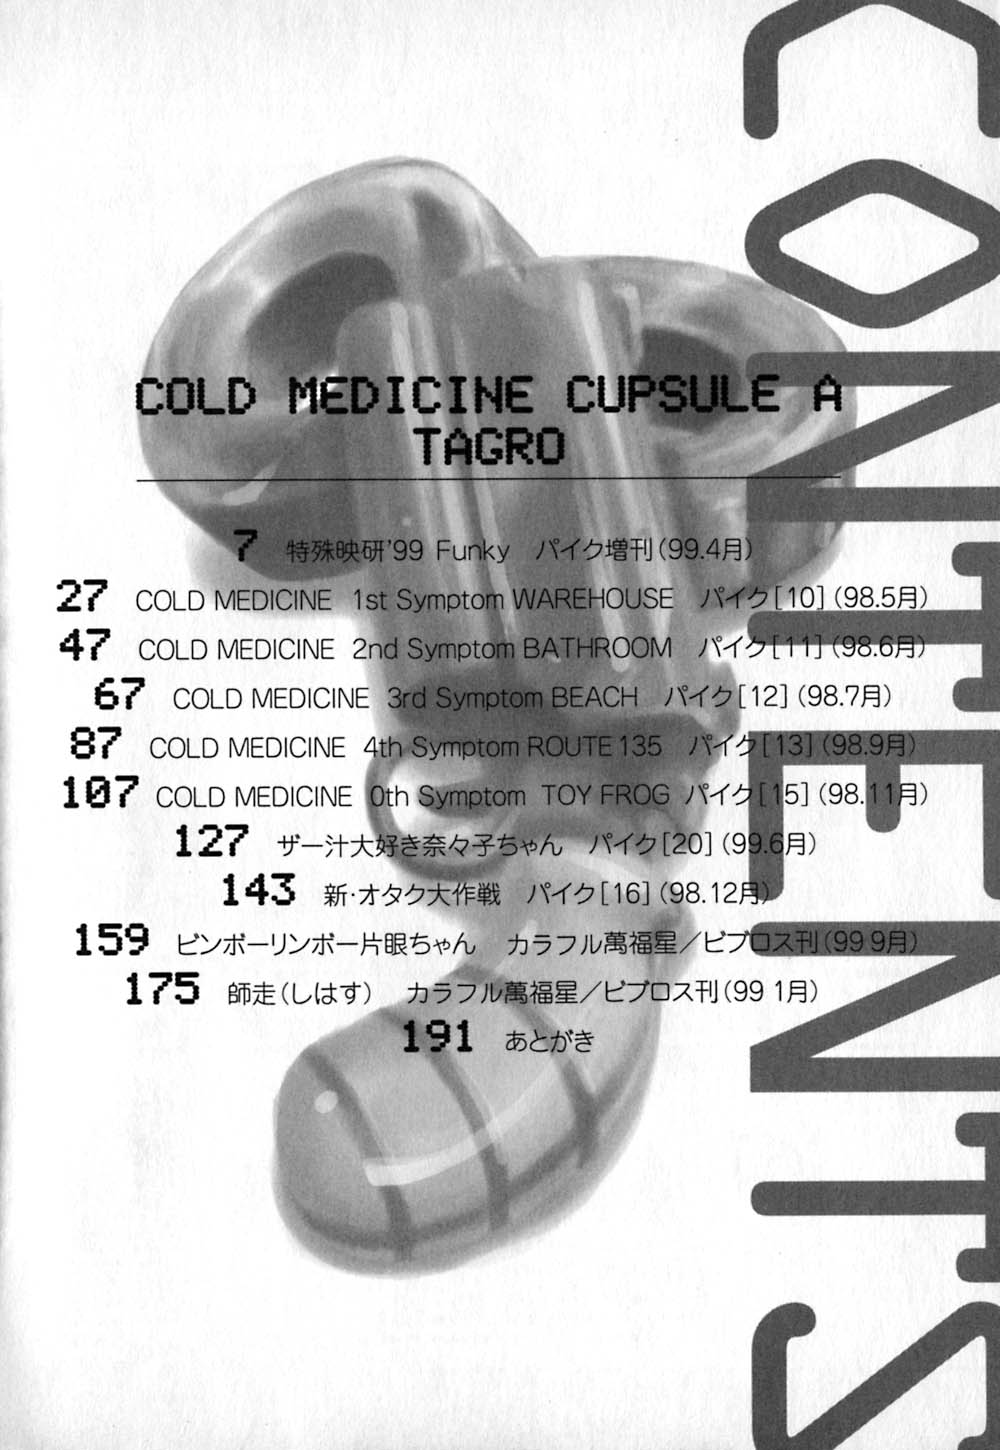 [TAGRO] コールドメディシン A錠 - Cold Medicine Capsule A